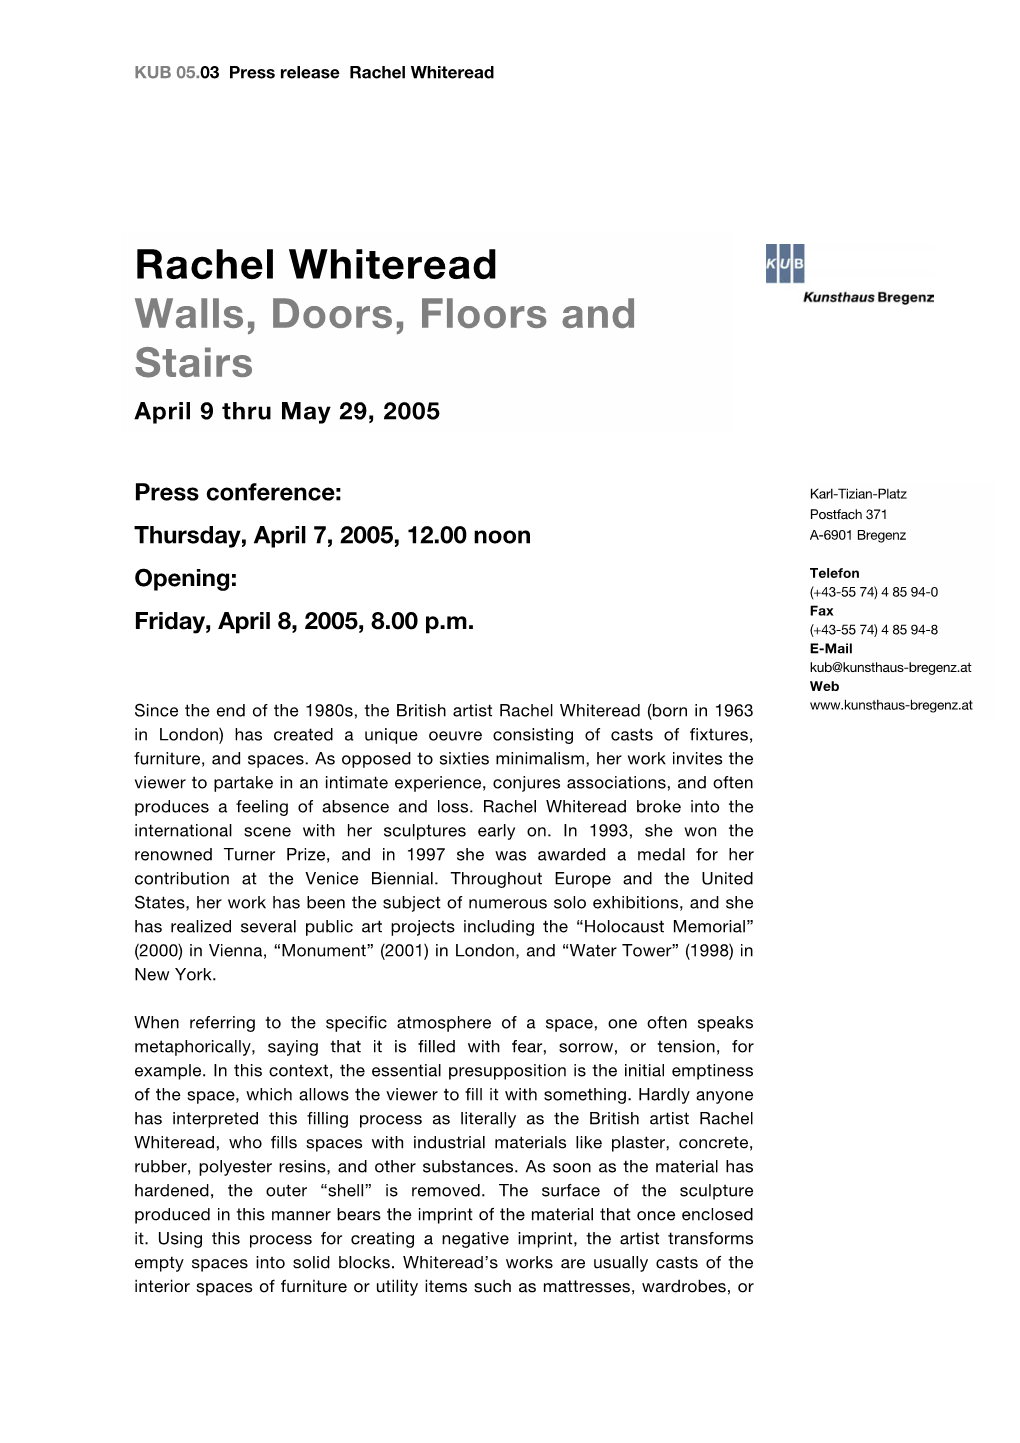 Rachel Whiteread Walls, Doors, Floors and Stairs April 9 Thru May 29, 2005